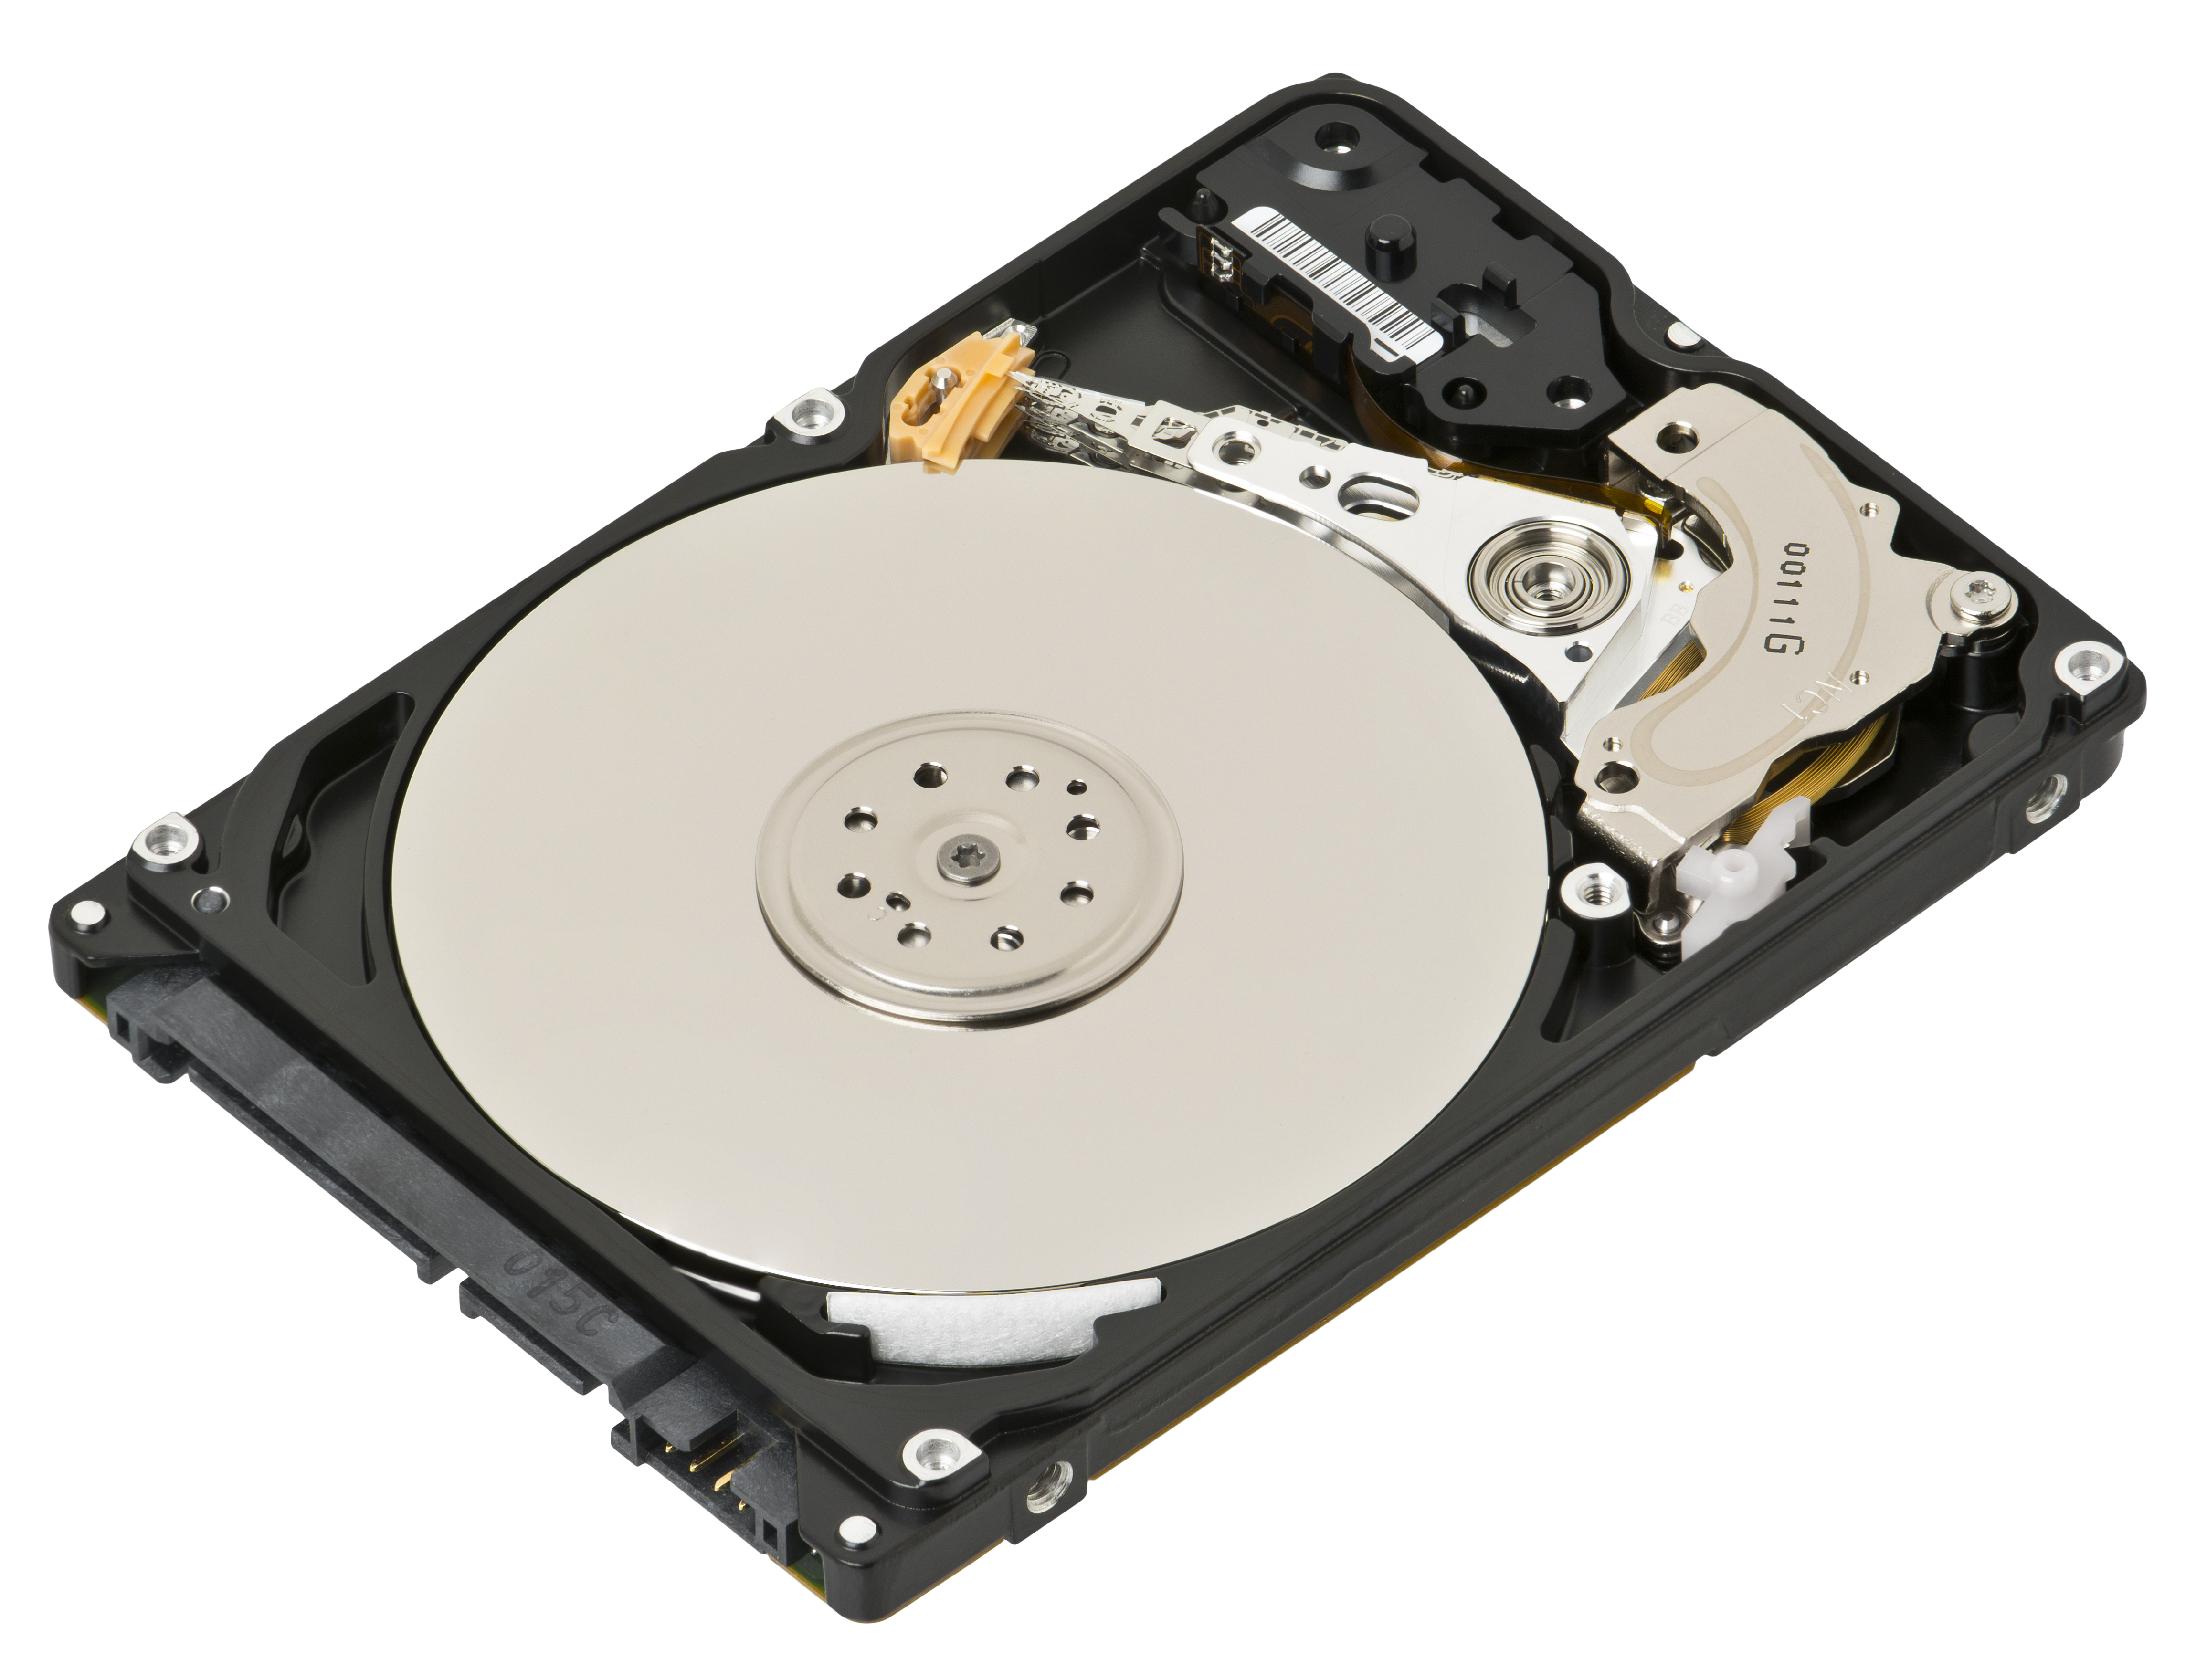 Dell W3004 hard disk drive 80GB 3.5 inch SATA 8MB 7200RPM (0W3004)